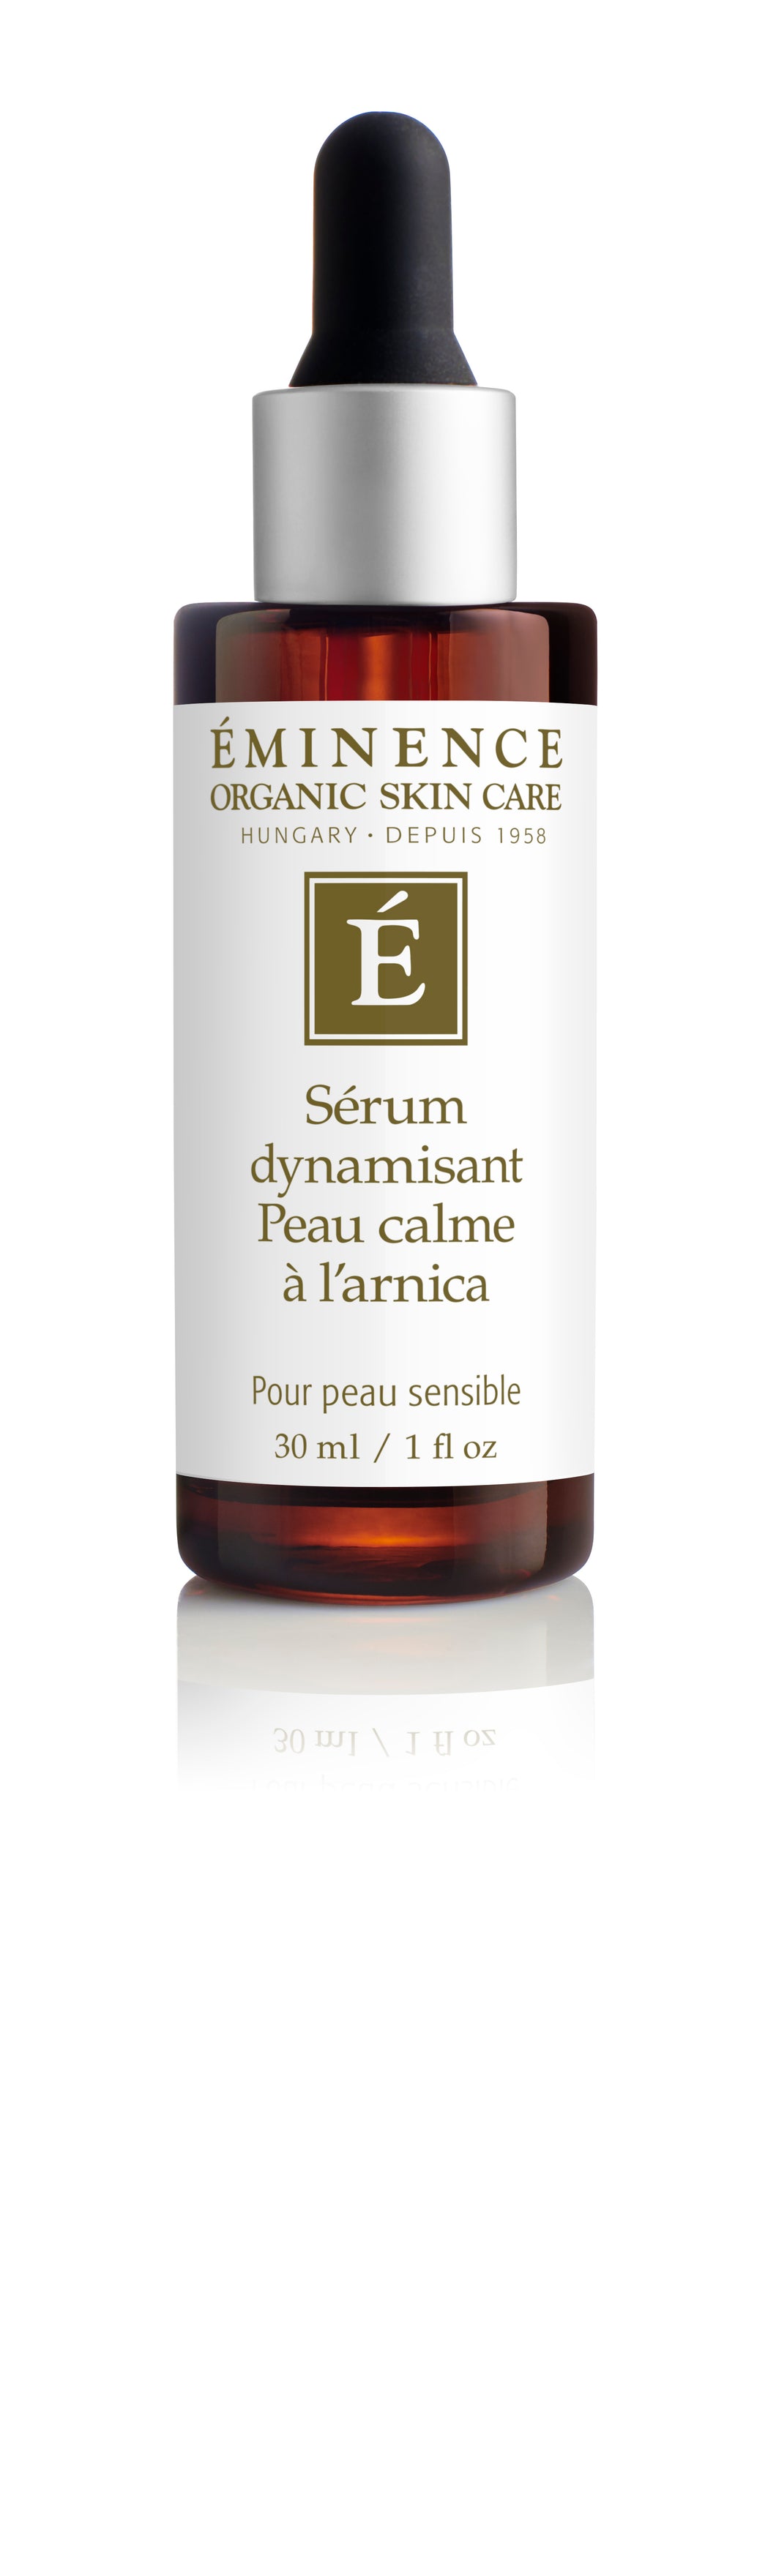 Calm skin energizing serum with arnica